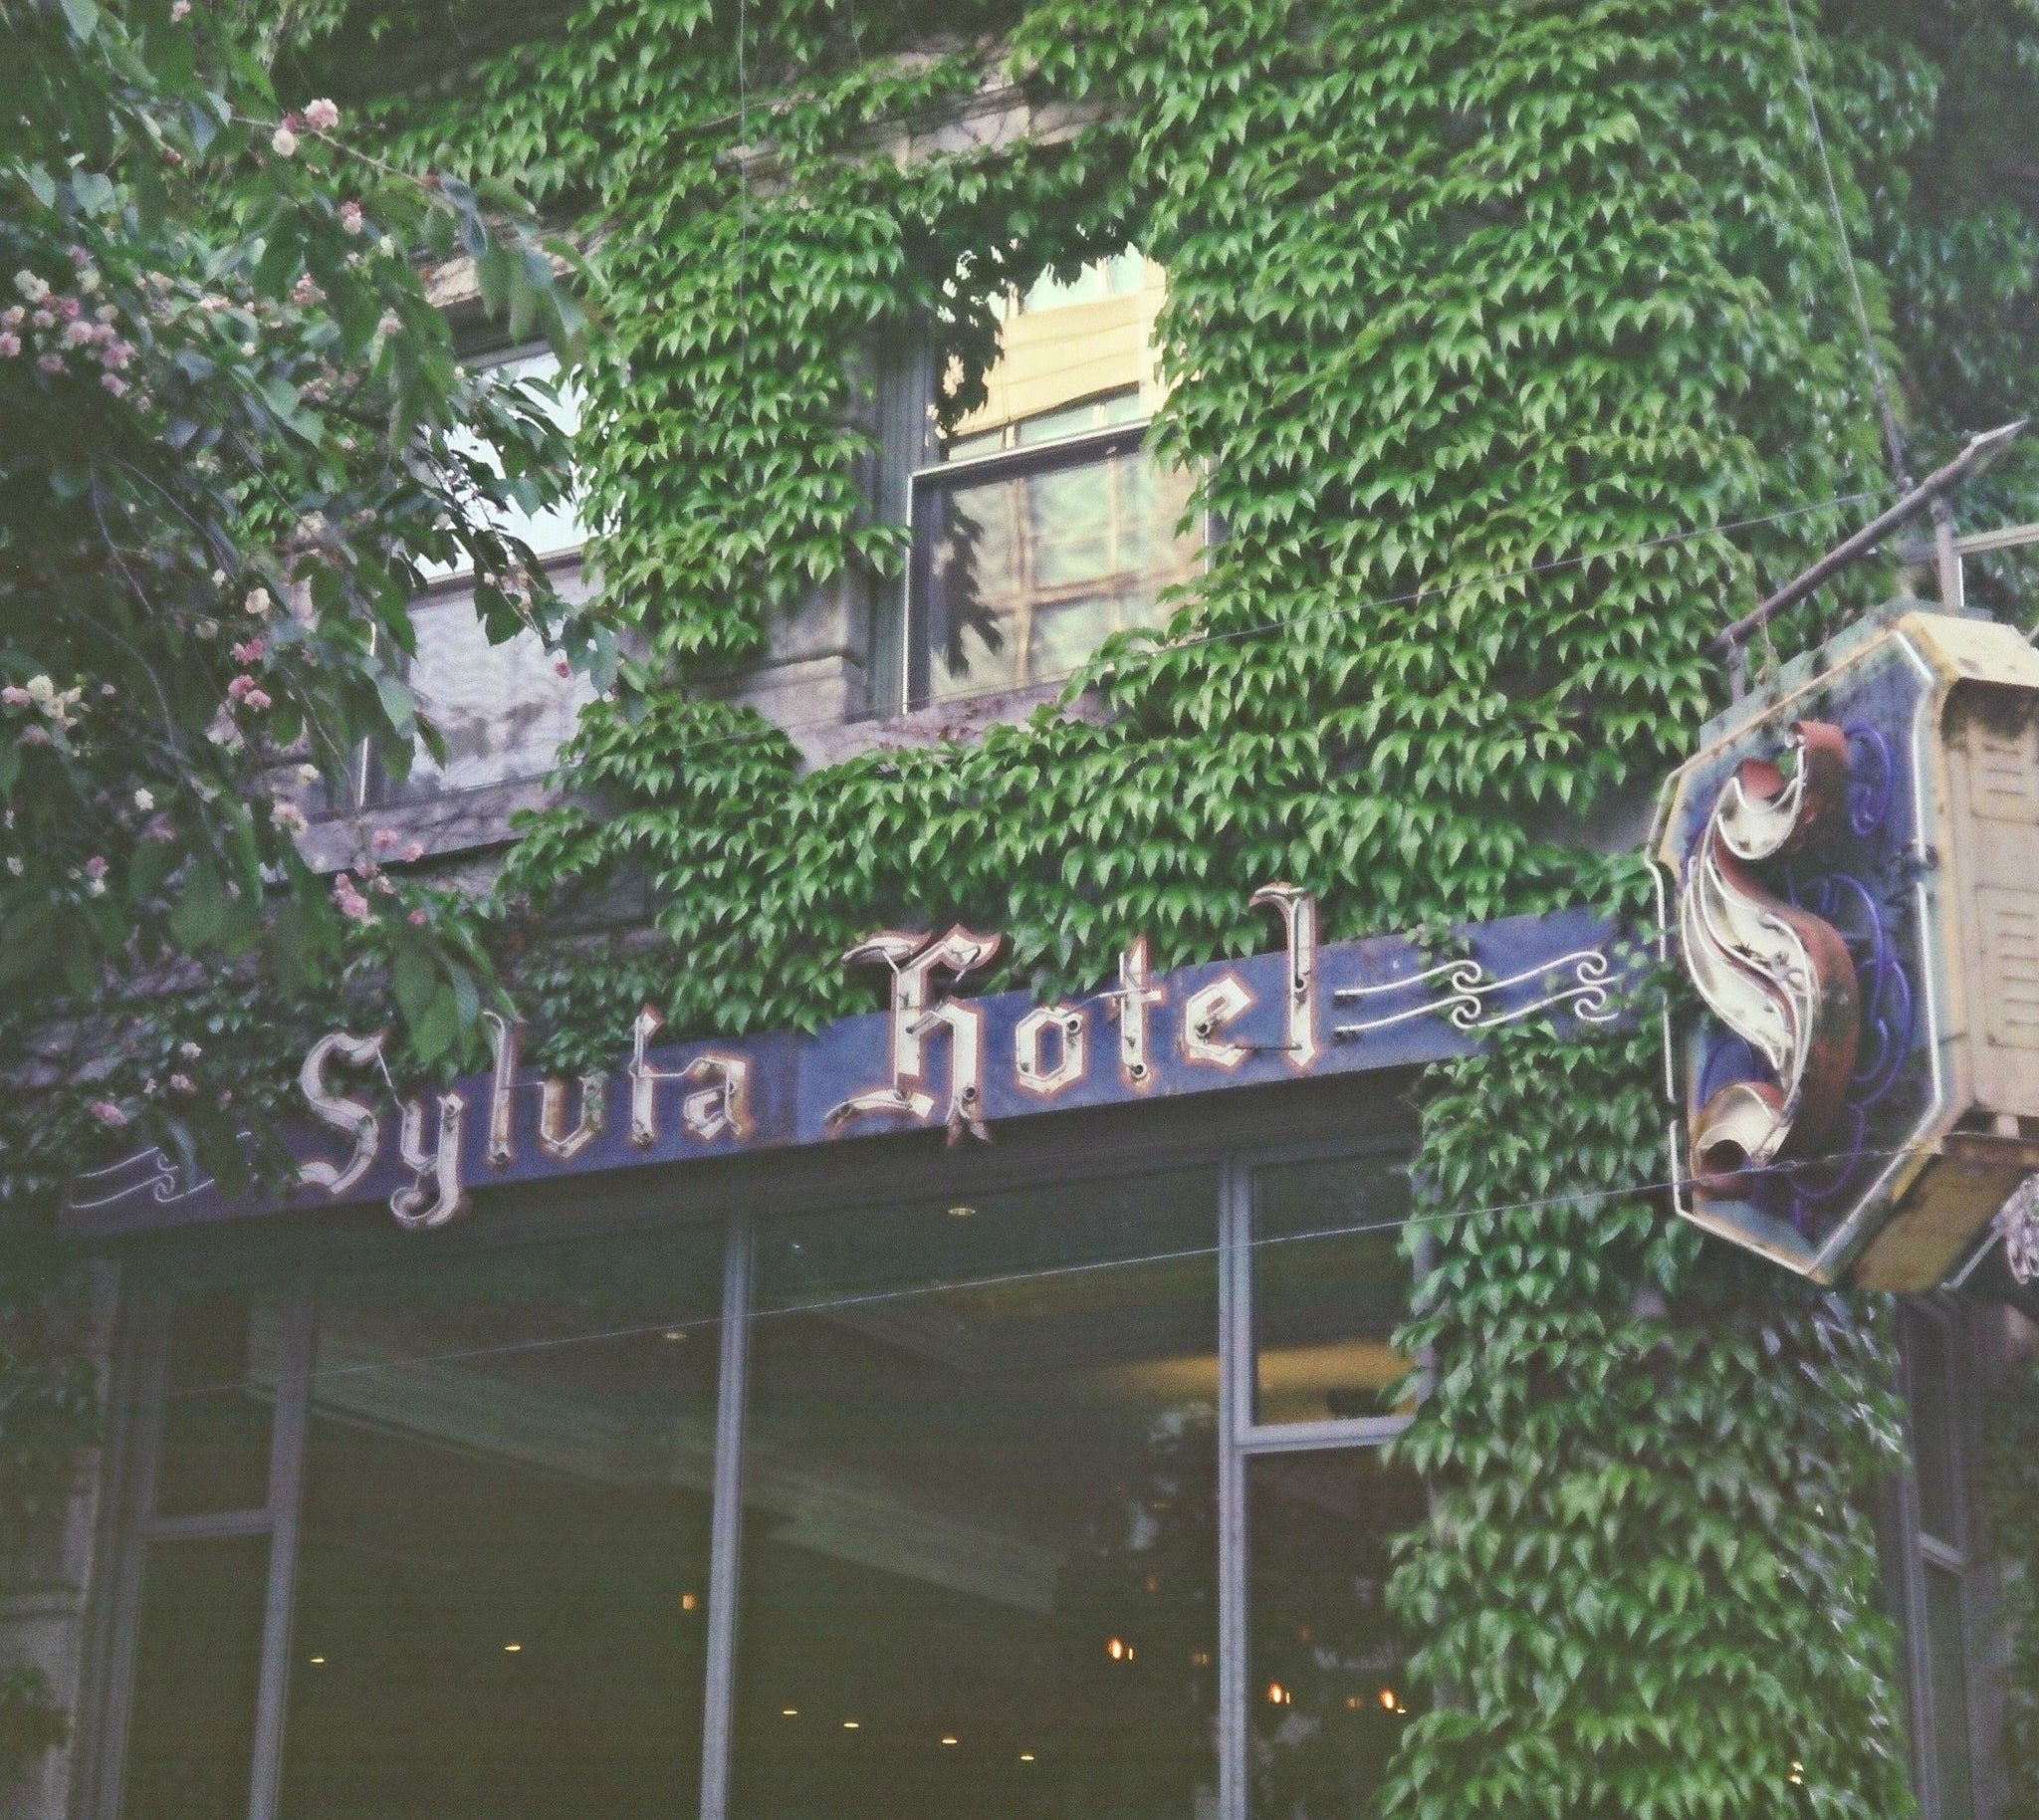 "Sylvia Hotel" Film Print